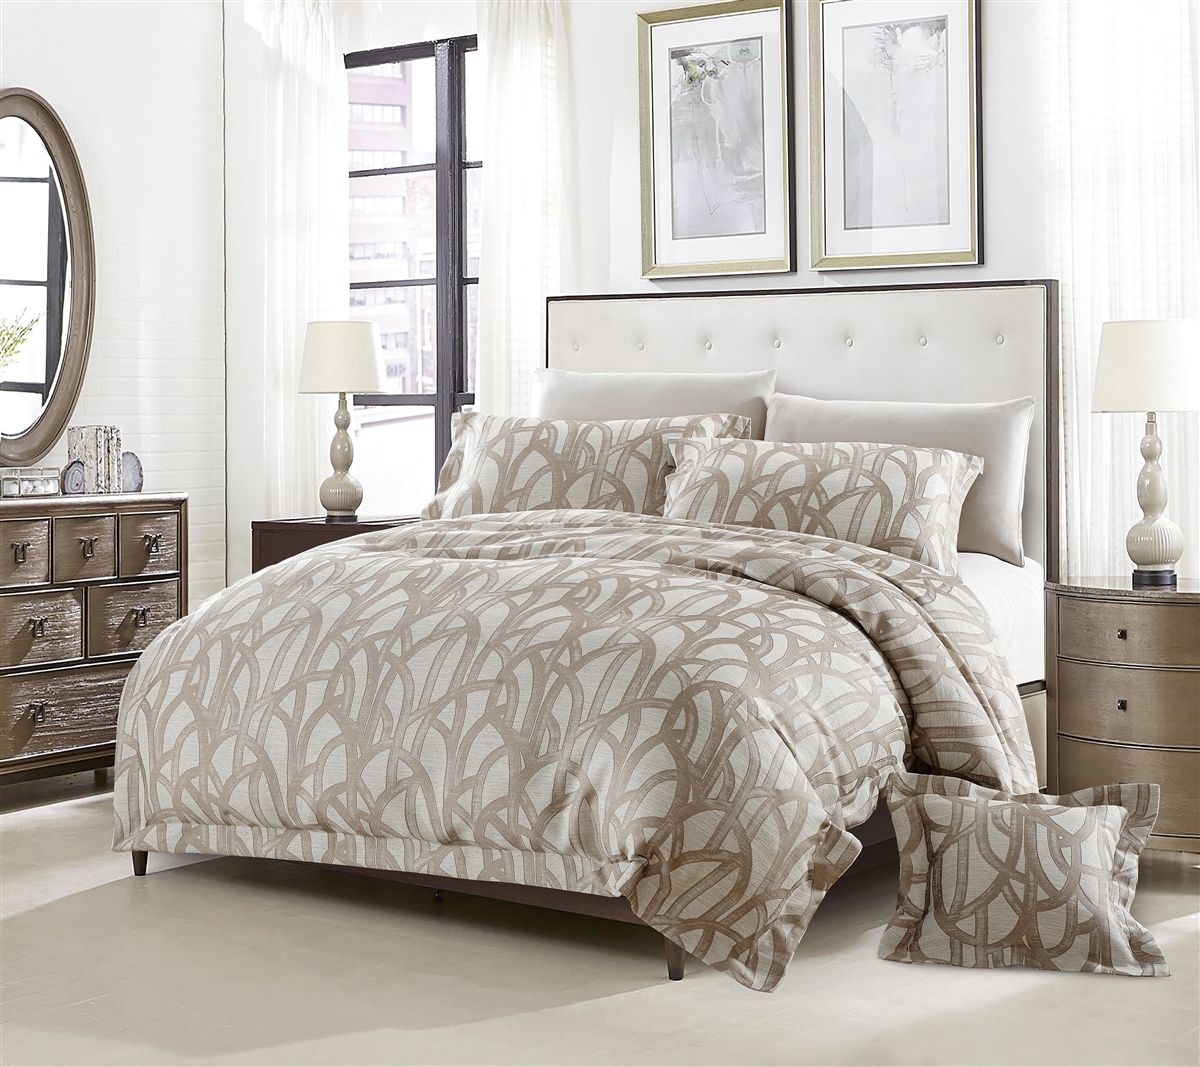 Aspen Luxury 8pc Twin Bedding Set - Discount Bed Linens